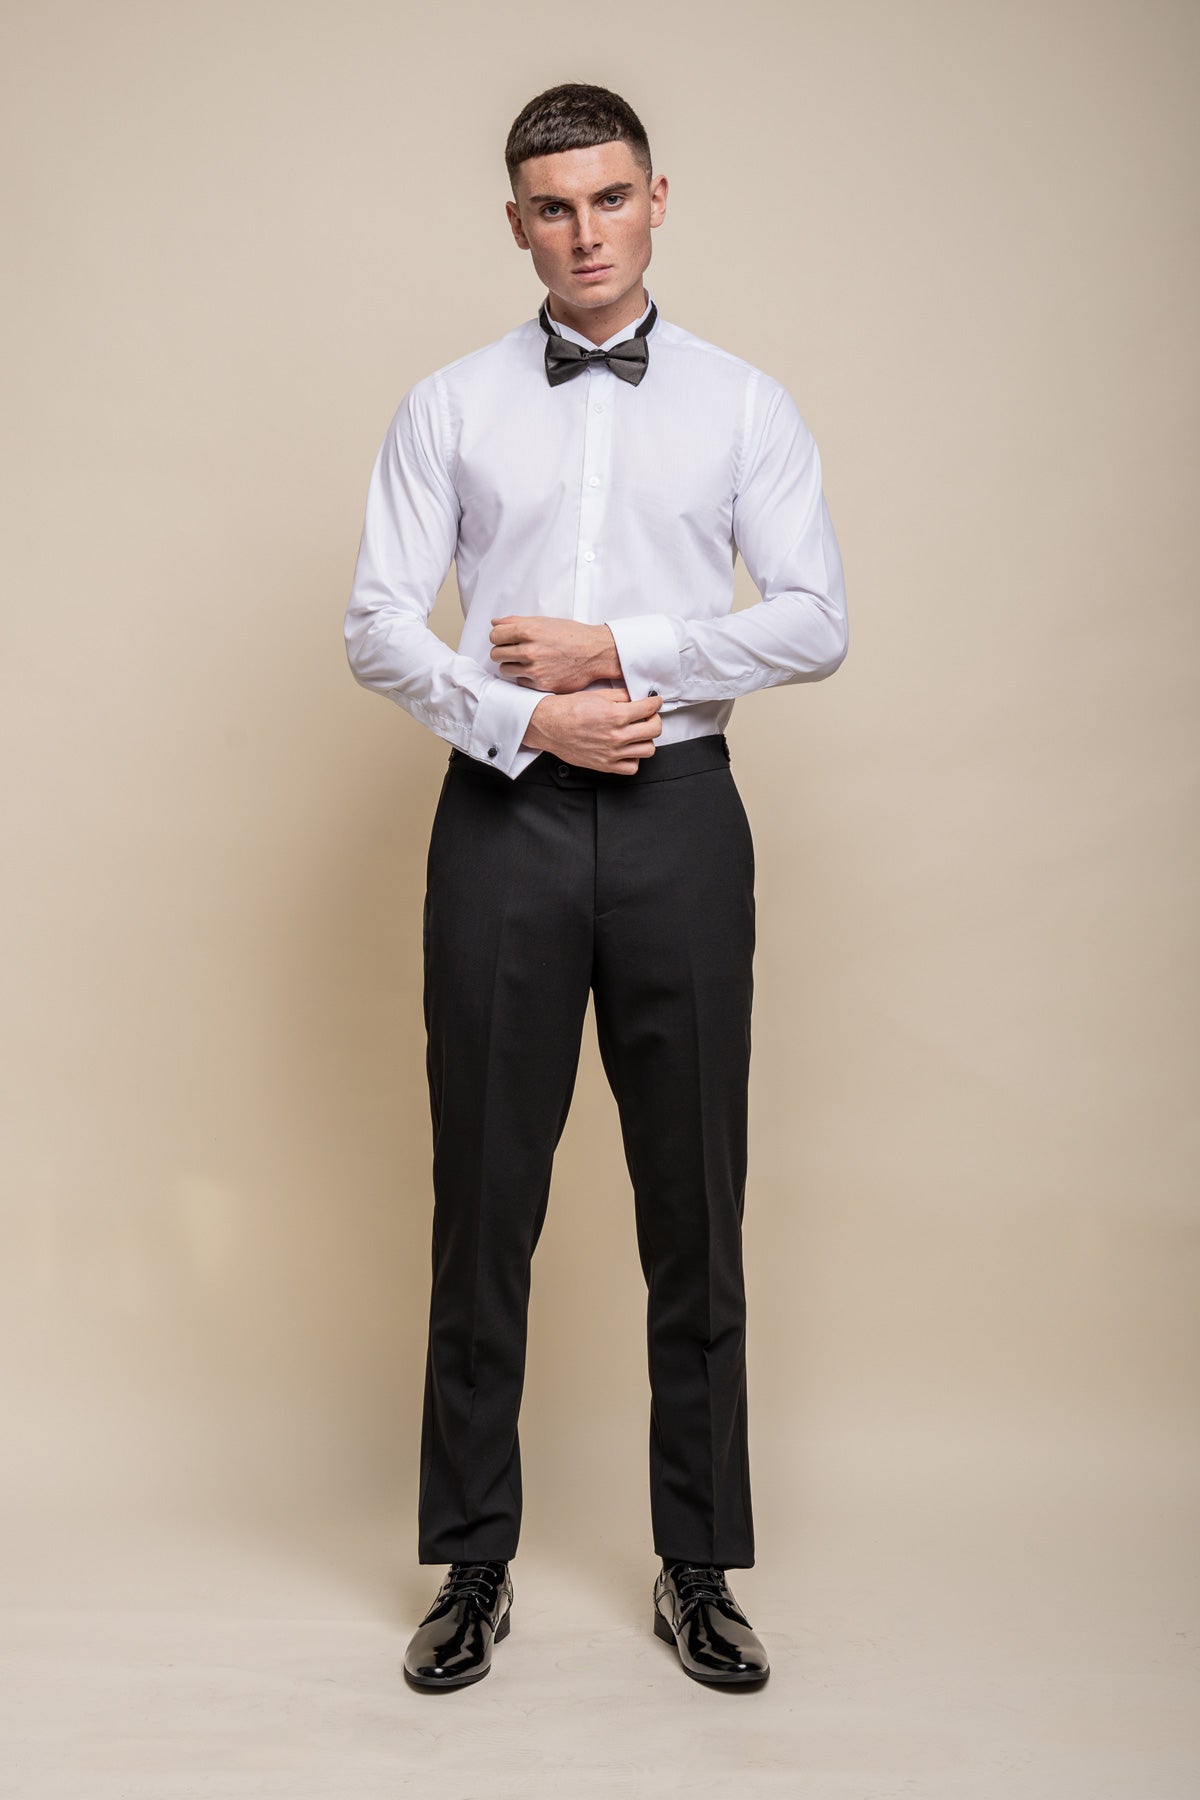 Aspen Black Tuxedo 2 Piece Wedding Suit - Suits - - Swagger & Swoon